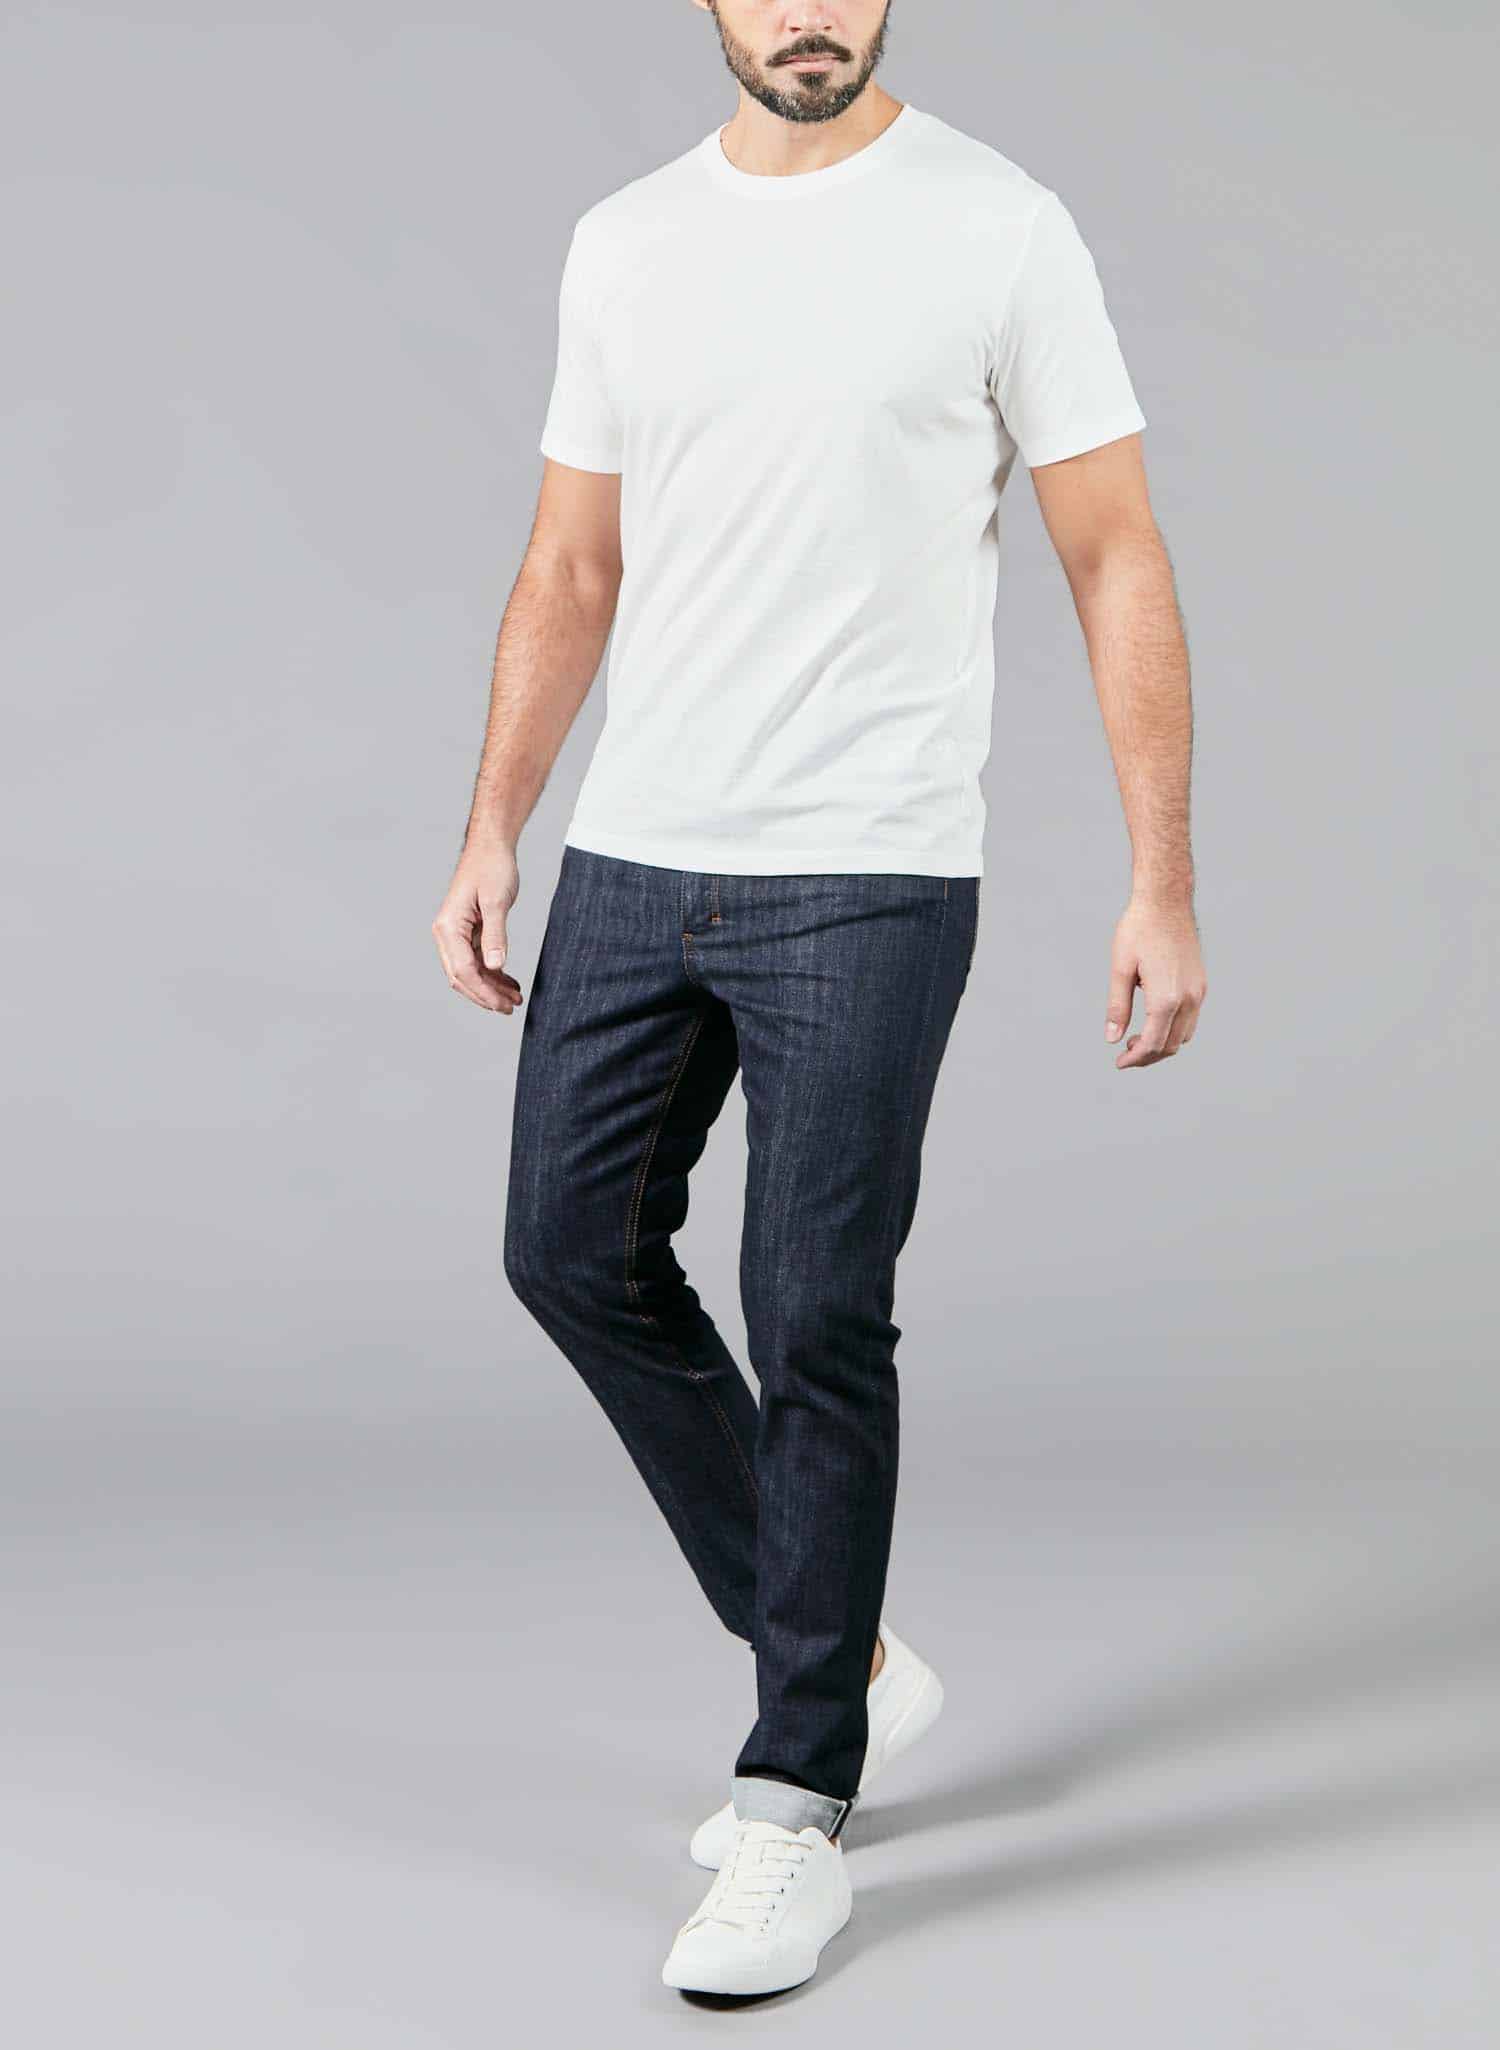 homme-jean-tshirt-blanc